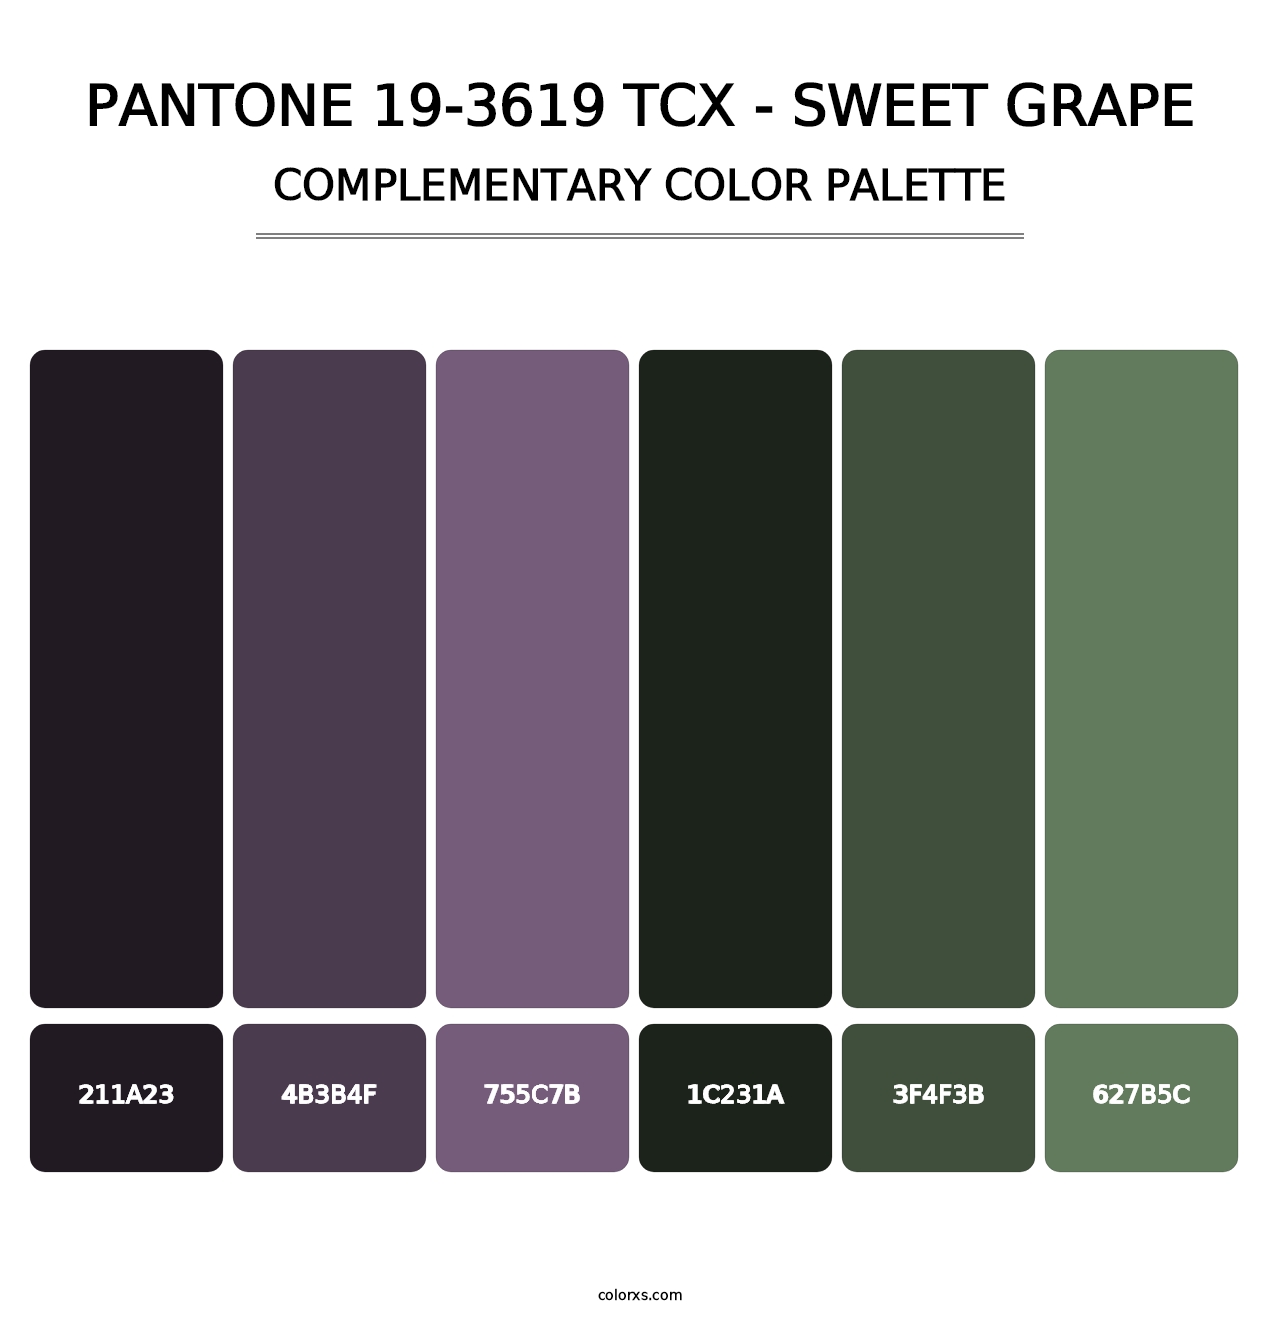 PANTONE 19-3619 TCX - Sweet Grape - Complementary Color Palette